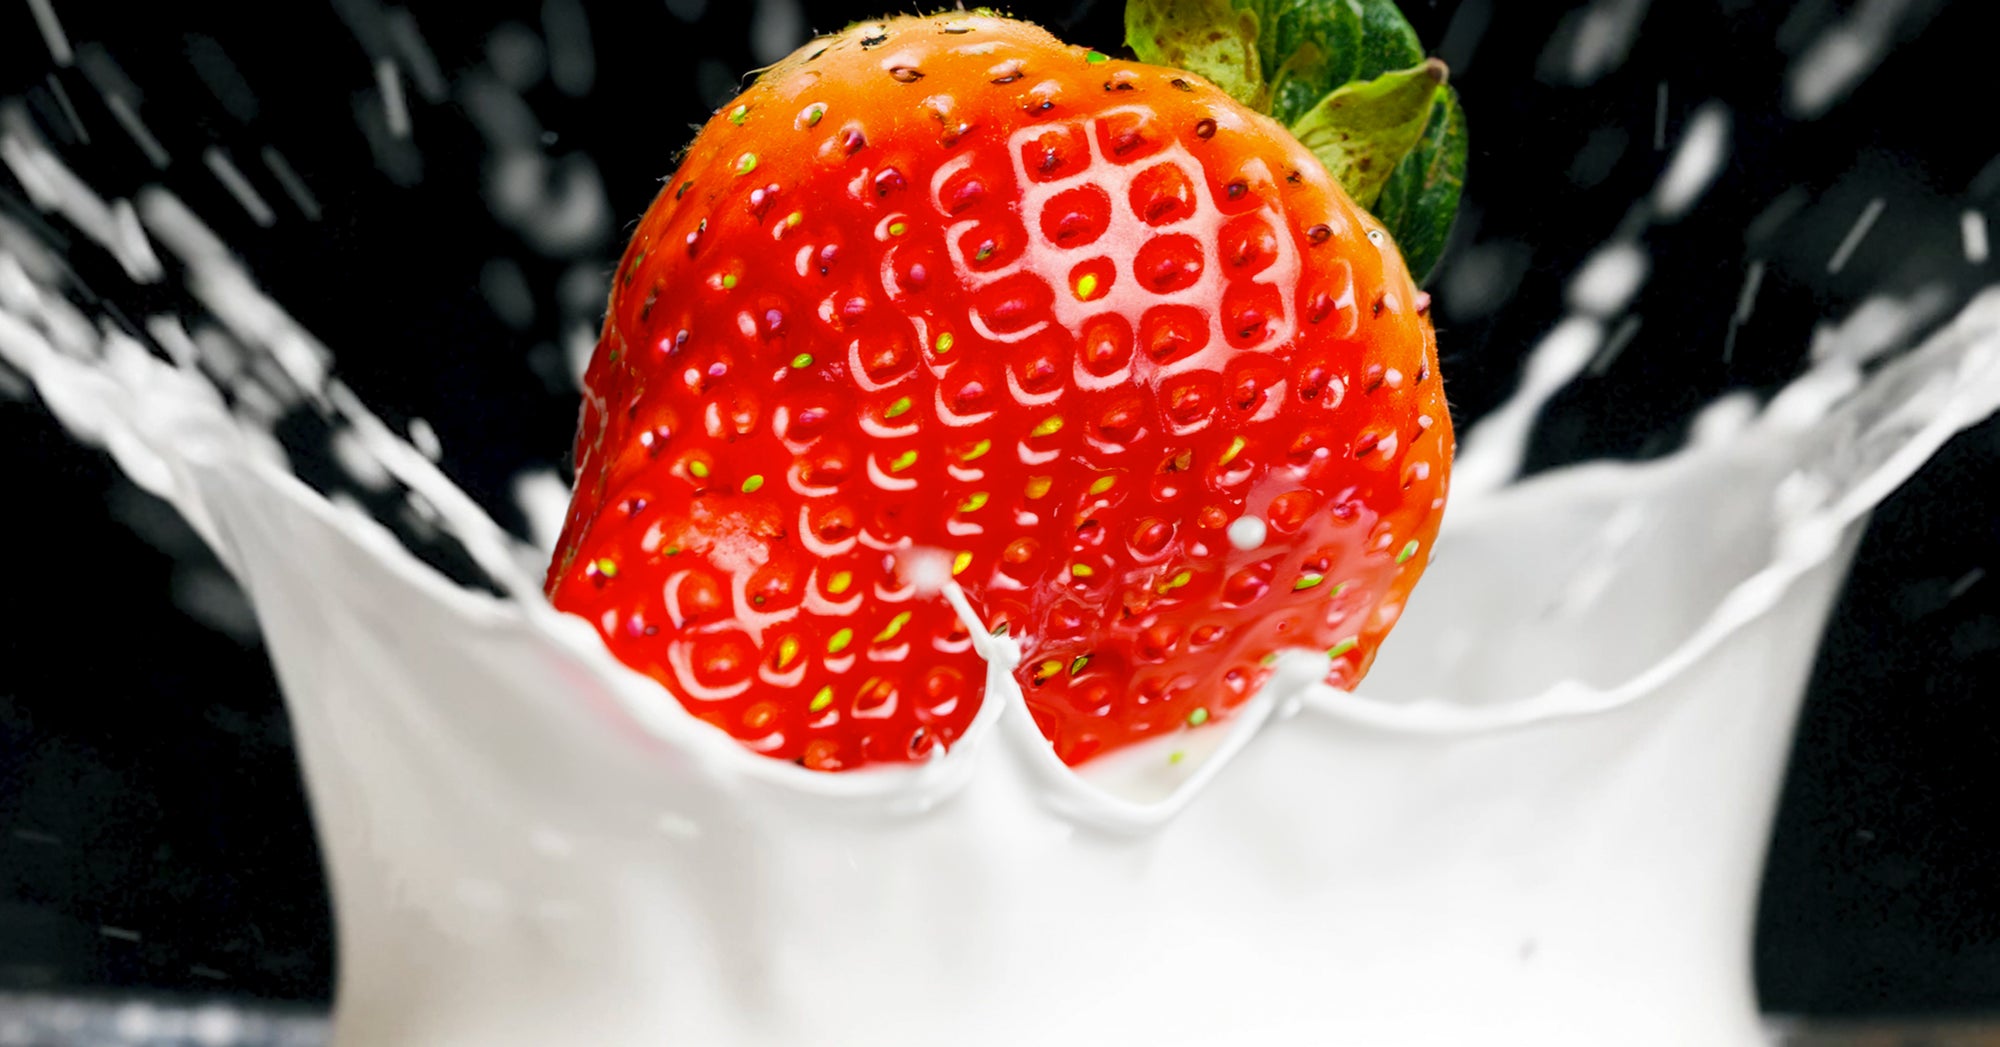 Strawberry splashing into a bowl of cream.